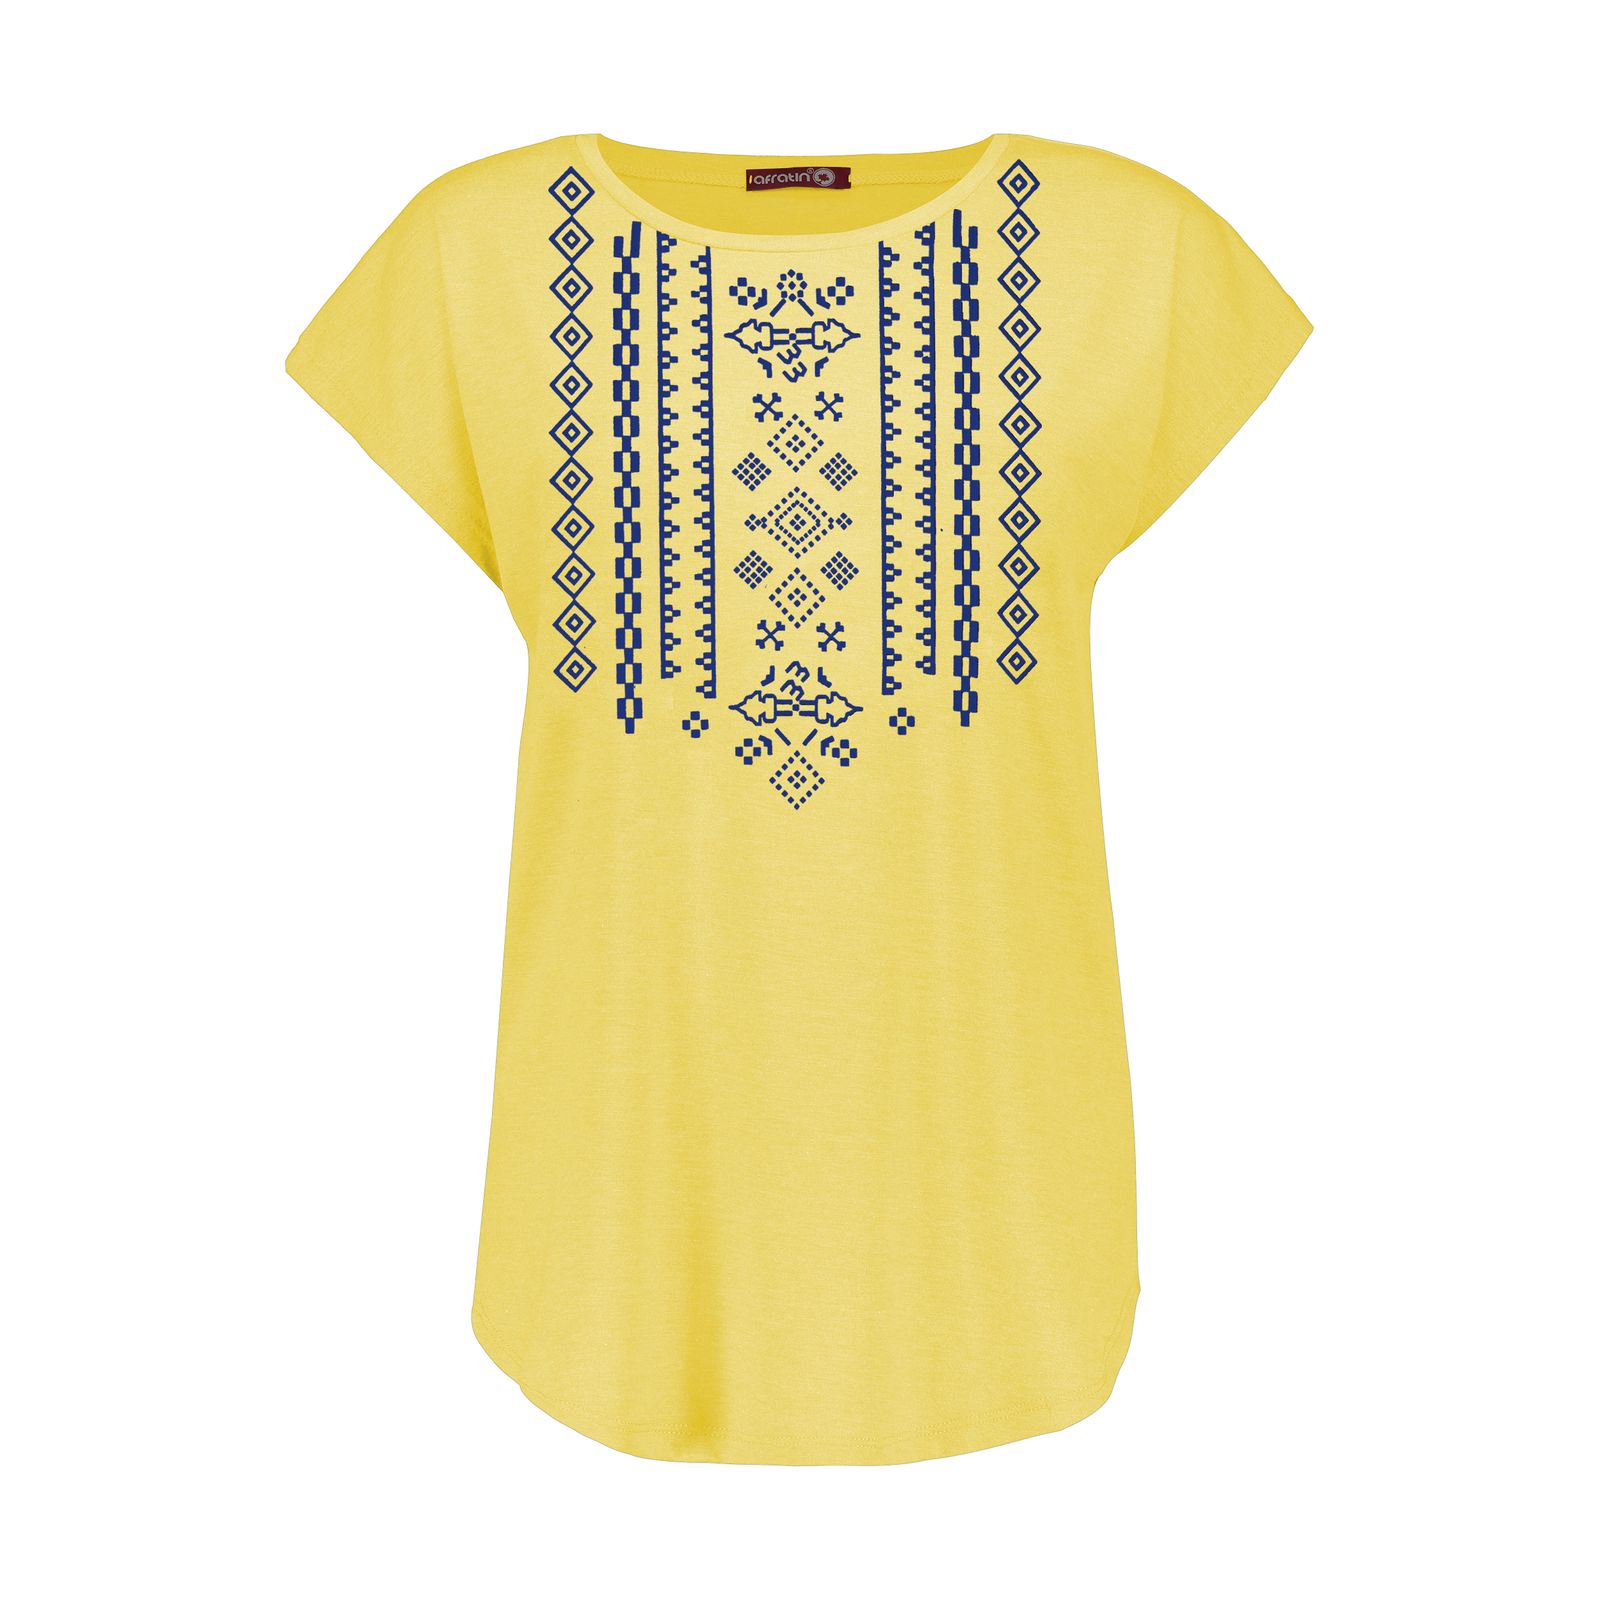 تی شرت زنانه افراتین کد 2551 رنگ زرد -  - 1